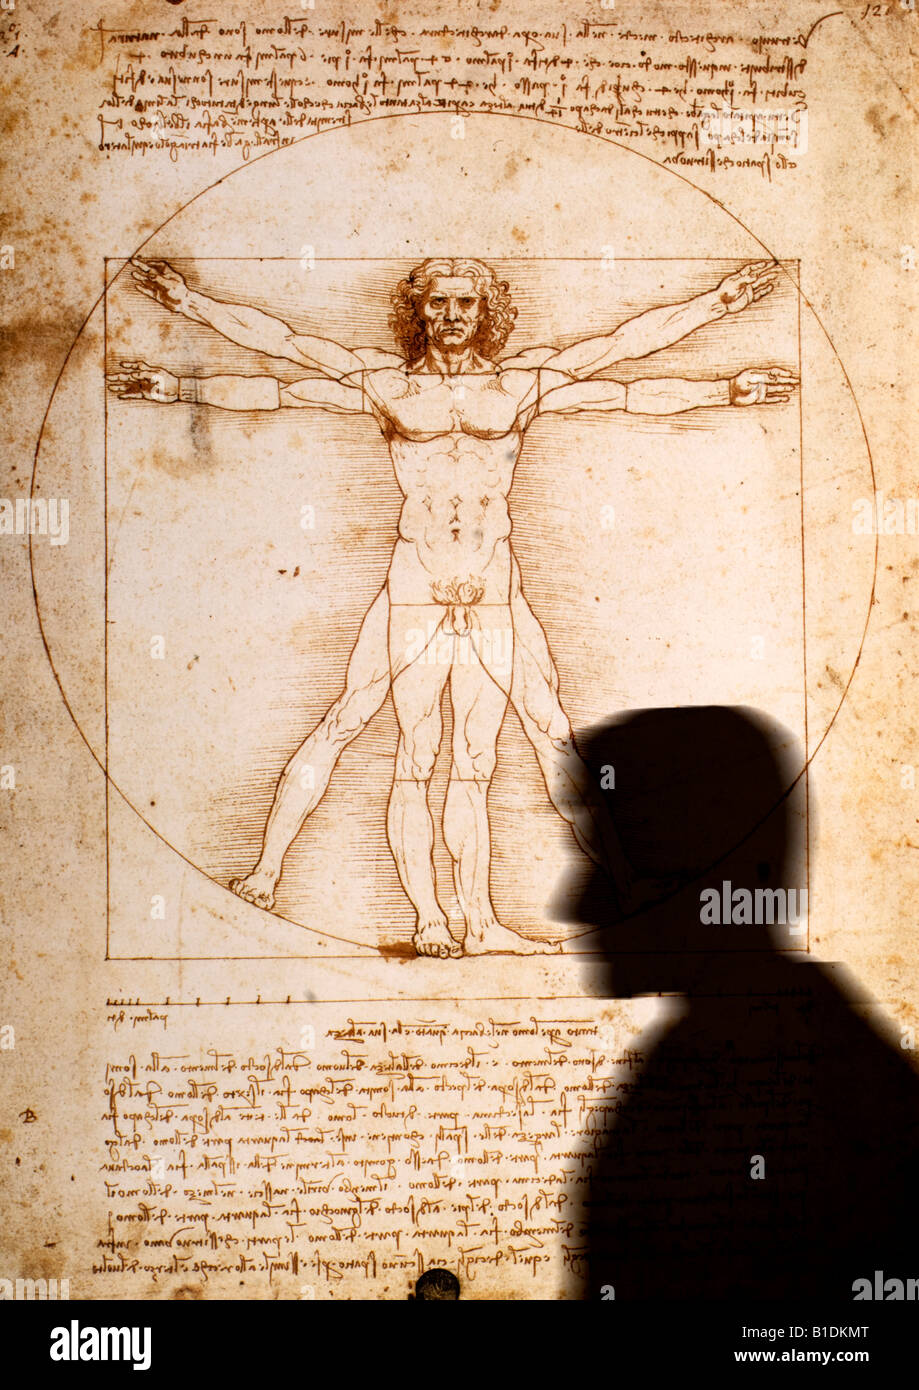 man walking past poster of Vitruvian Man by Leonardo da Vinci Stock Photo